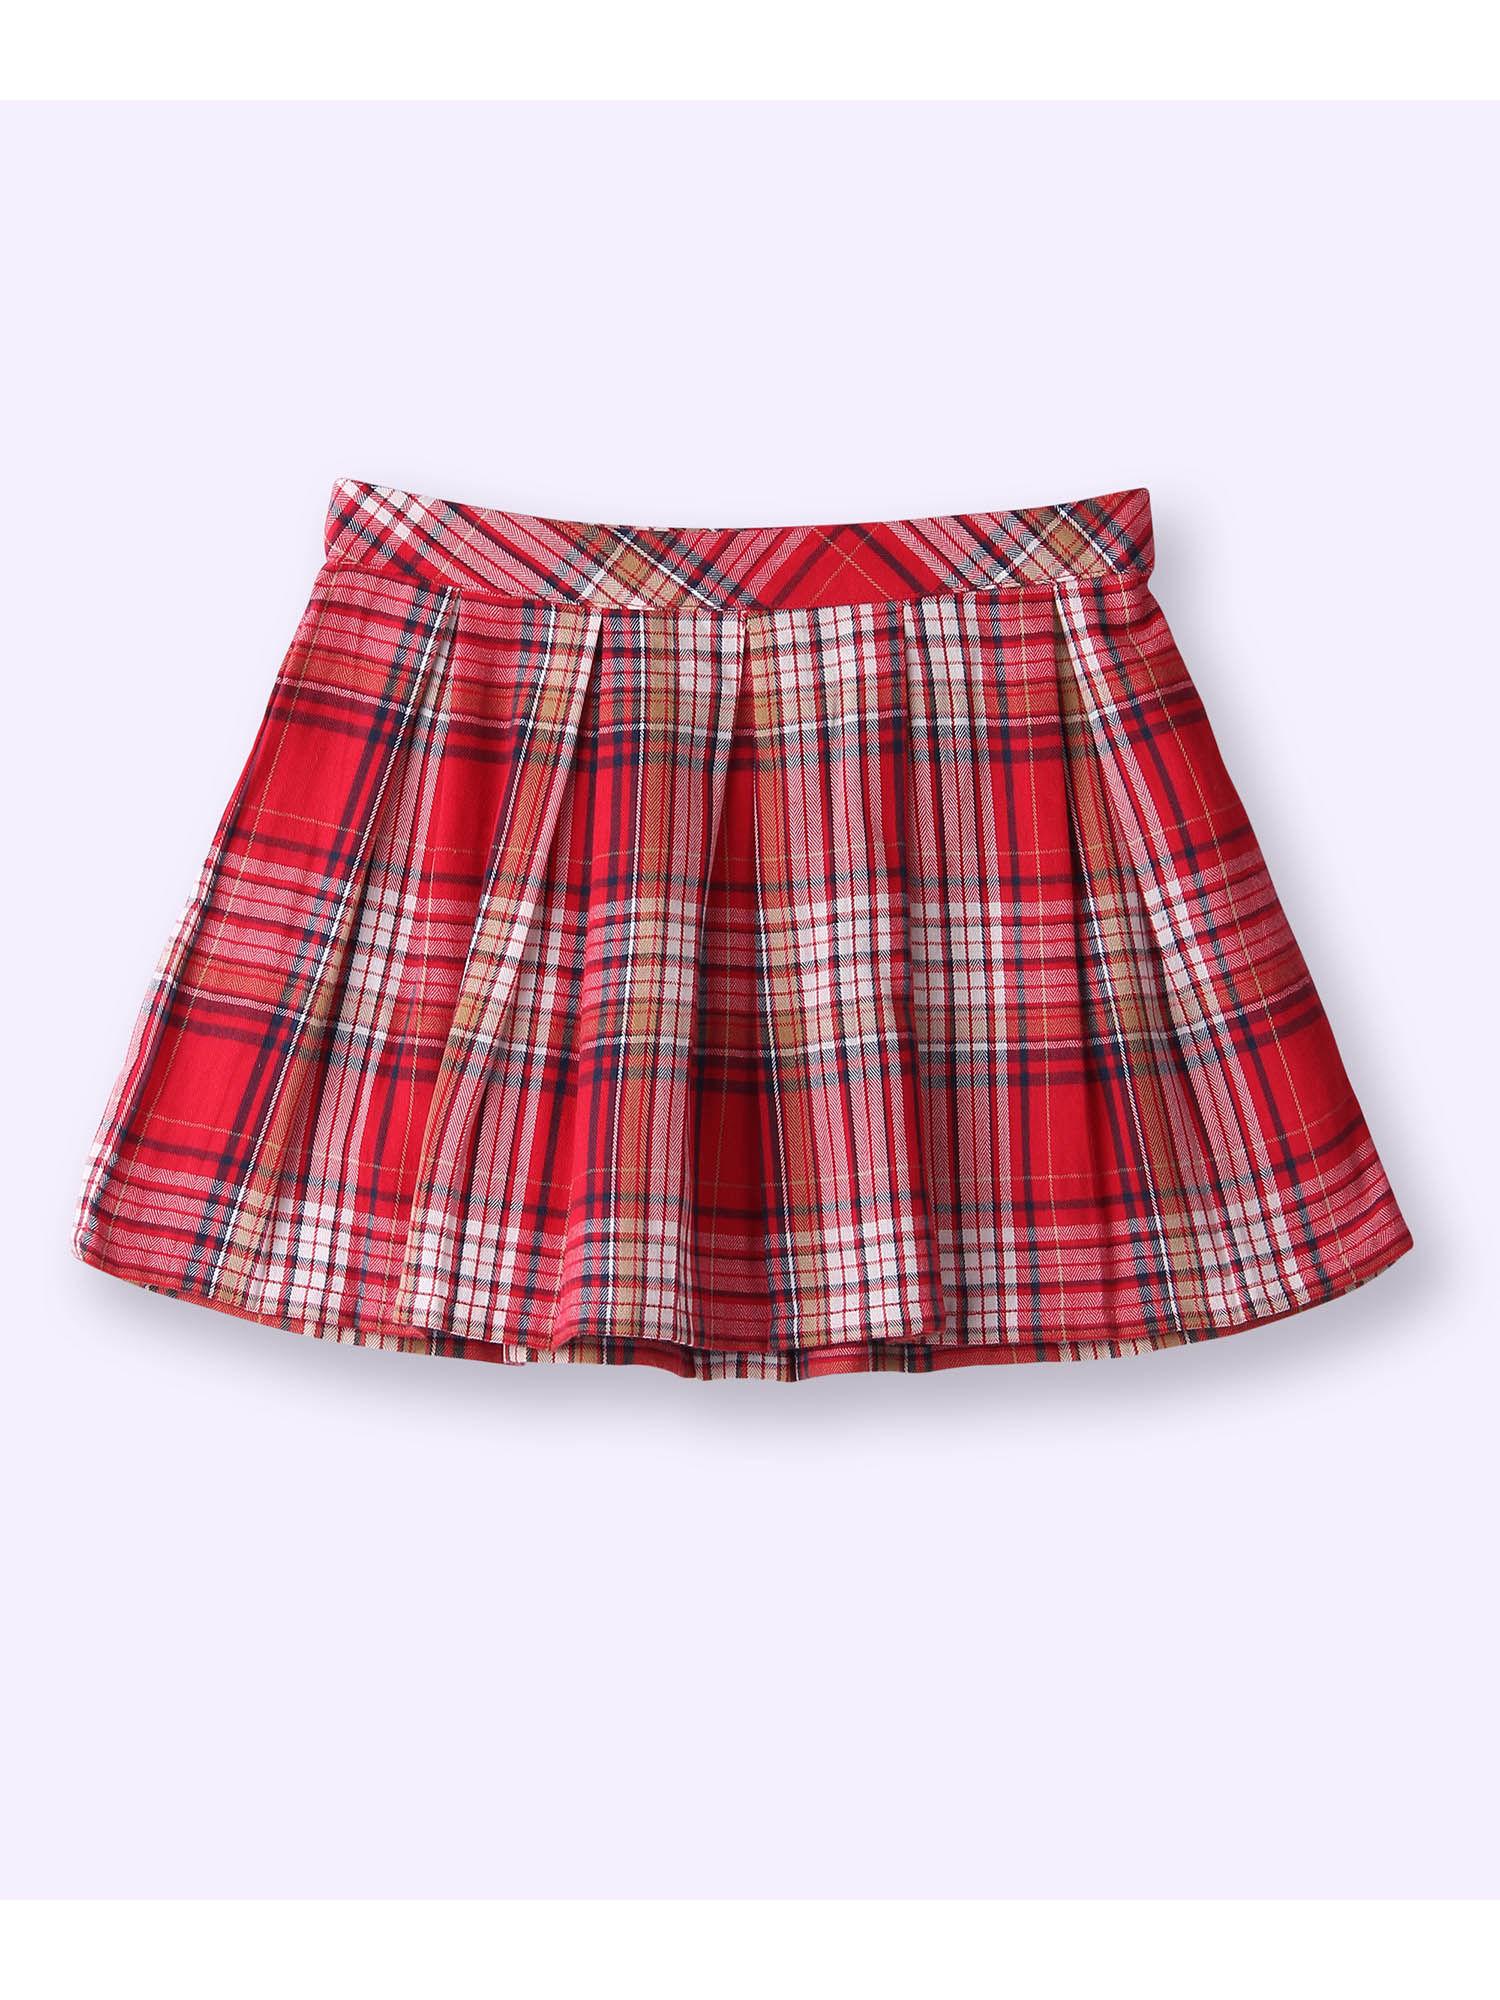 red check plaid knee length skirt